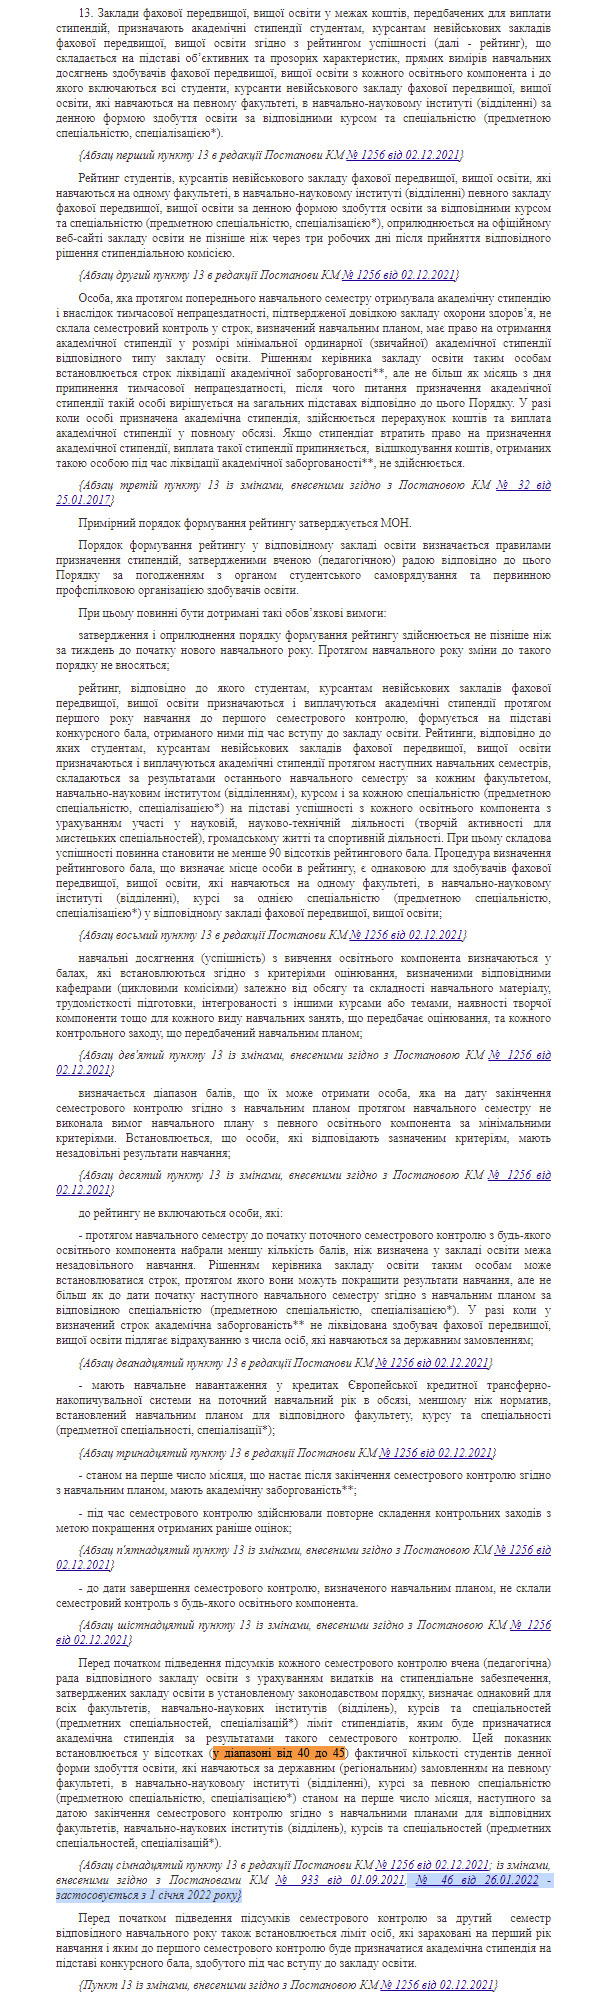 https://zakon.rada.gov.ua/laws/show/882-2004-%D0%BF#Text